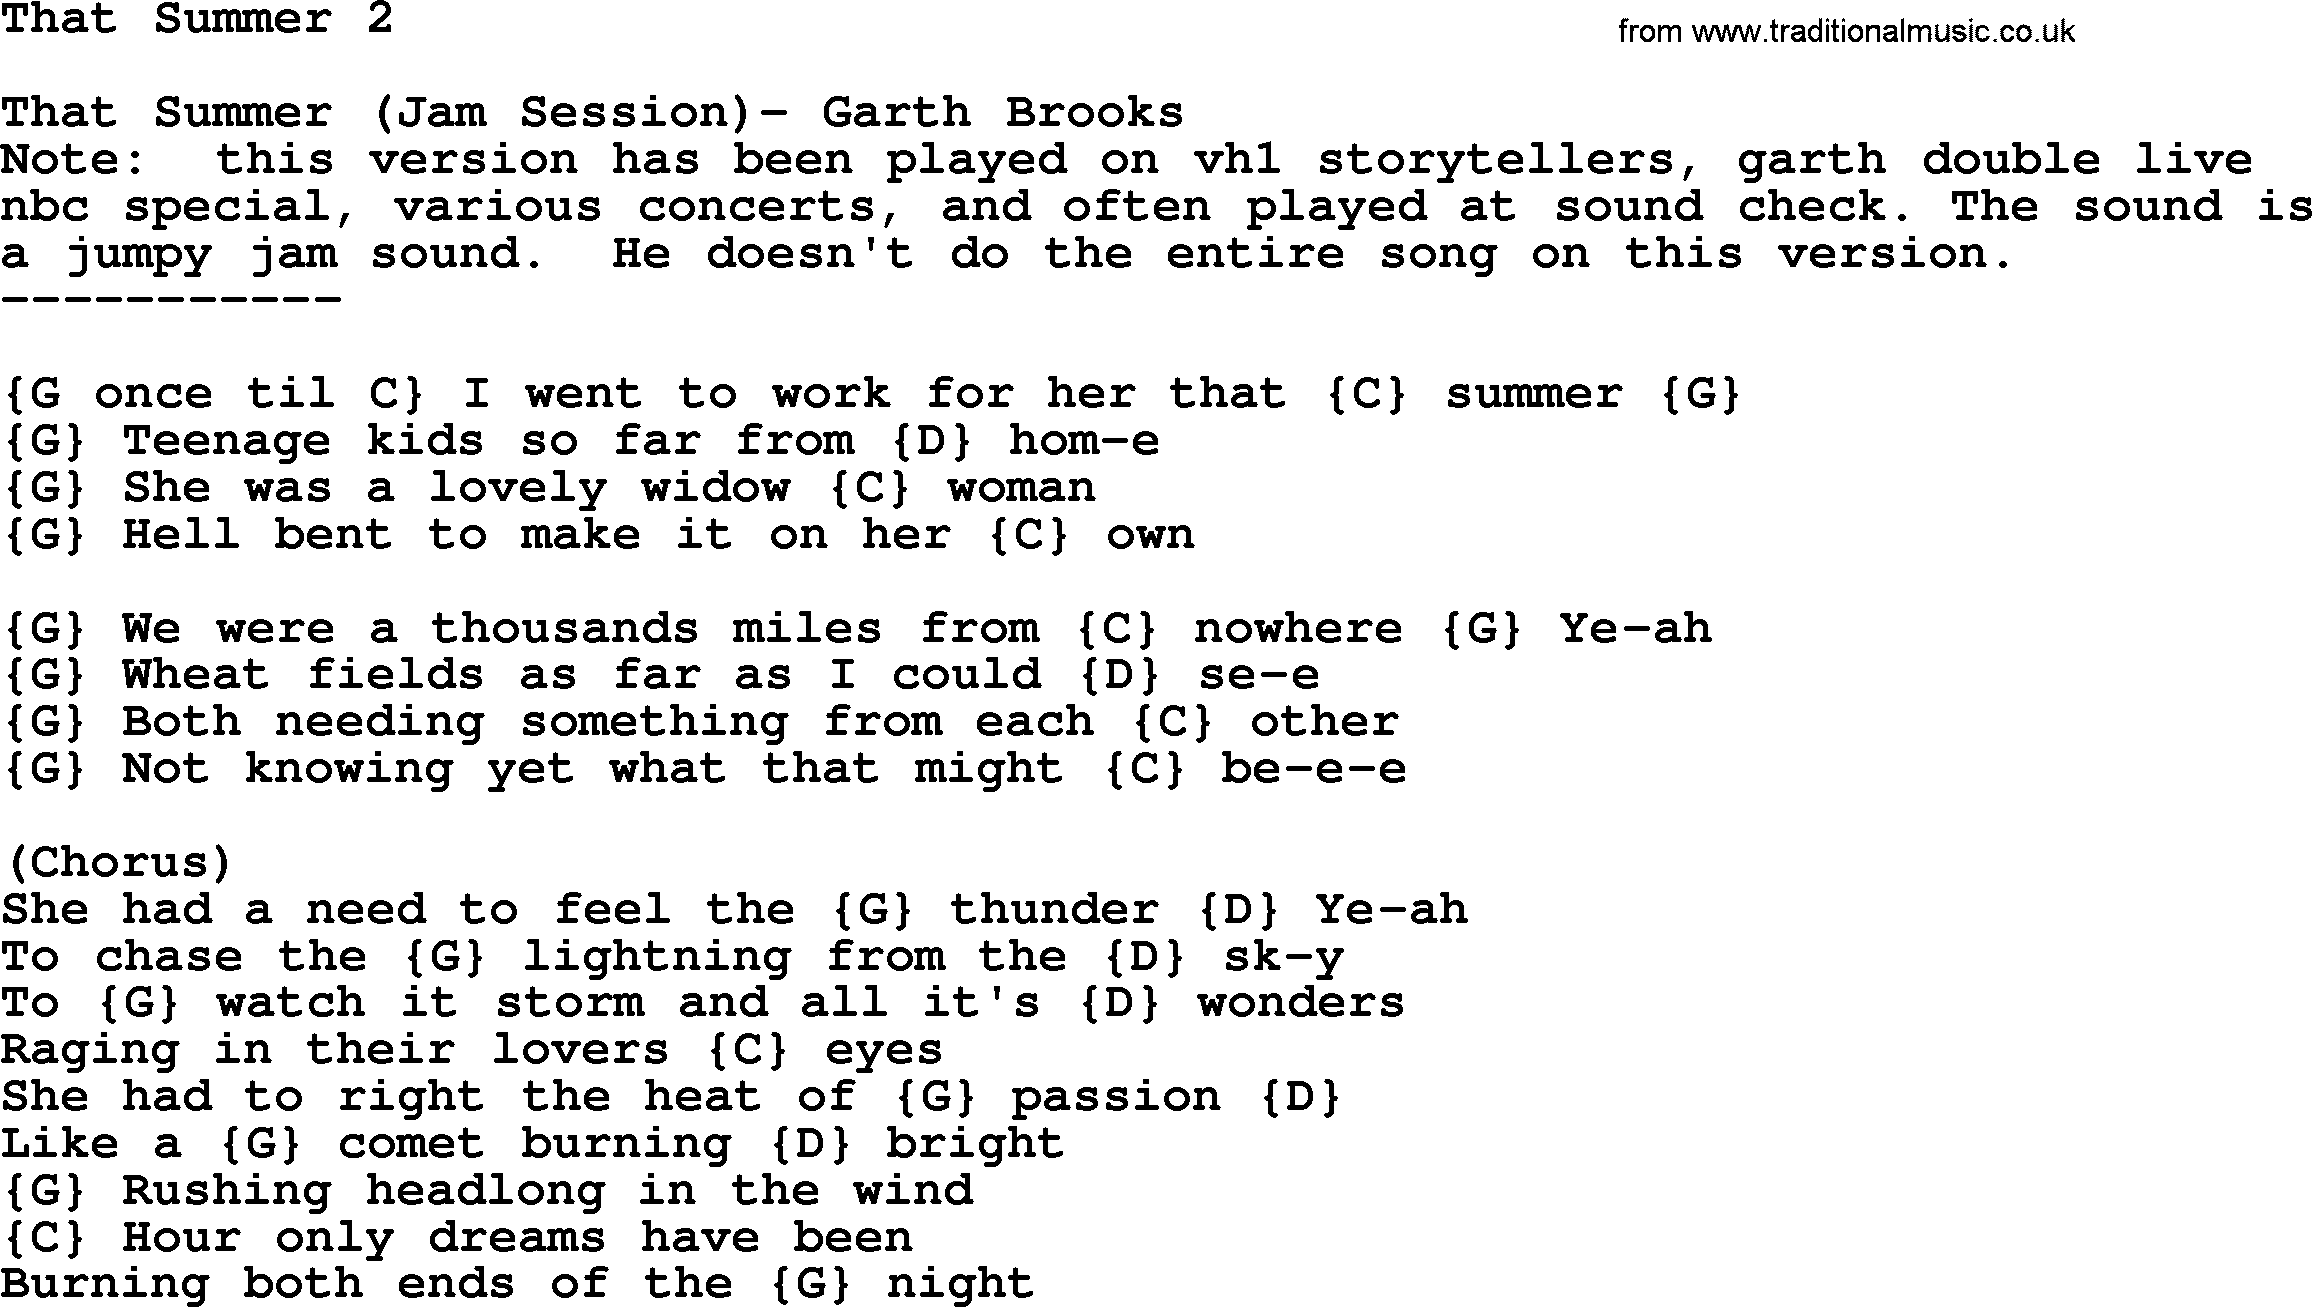 Garth Brooks song: That Summer 2, lyrics and chords